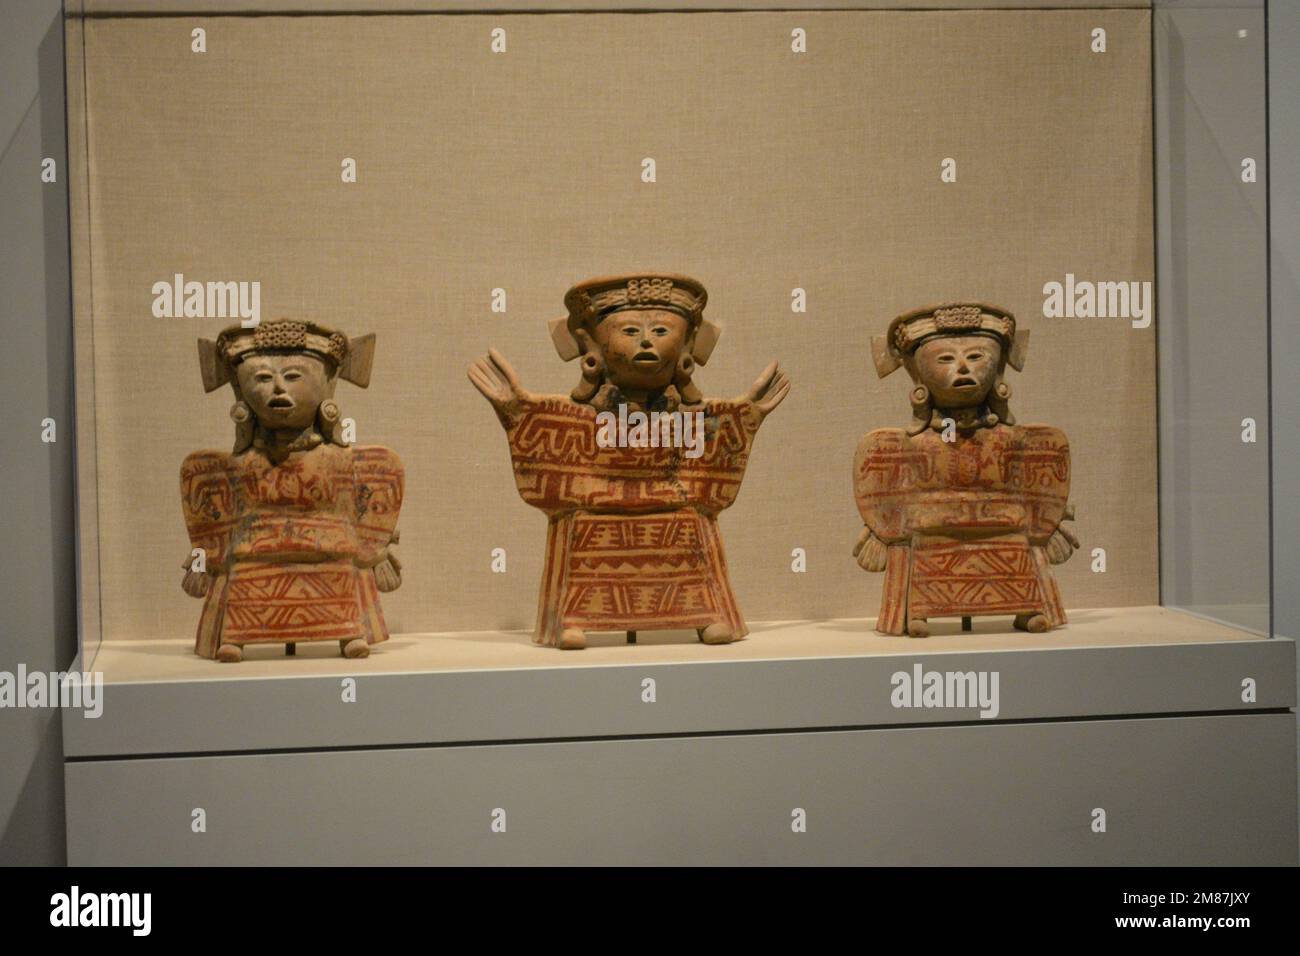 Three Standing Female Figures from El Faisan Area in Veracruz Mexico. Precolumbian art in the Dallas Museum of Art, Dallas Texas Stock Photo